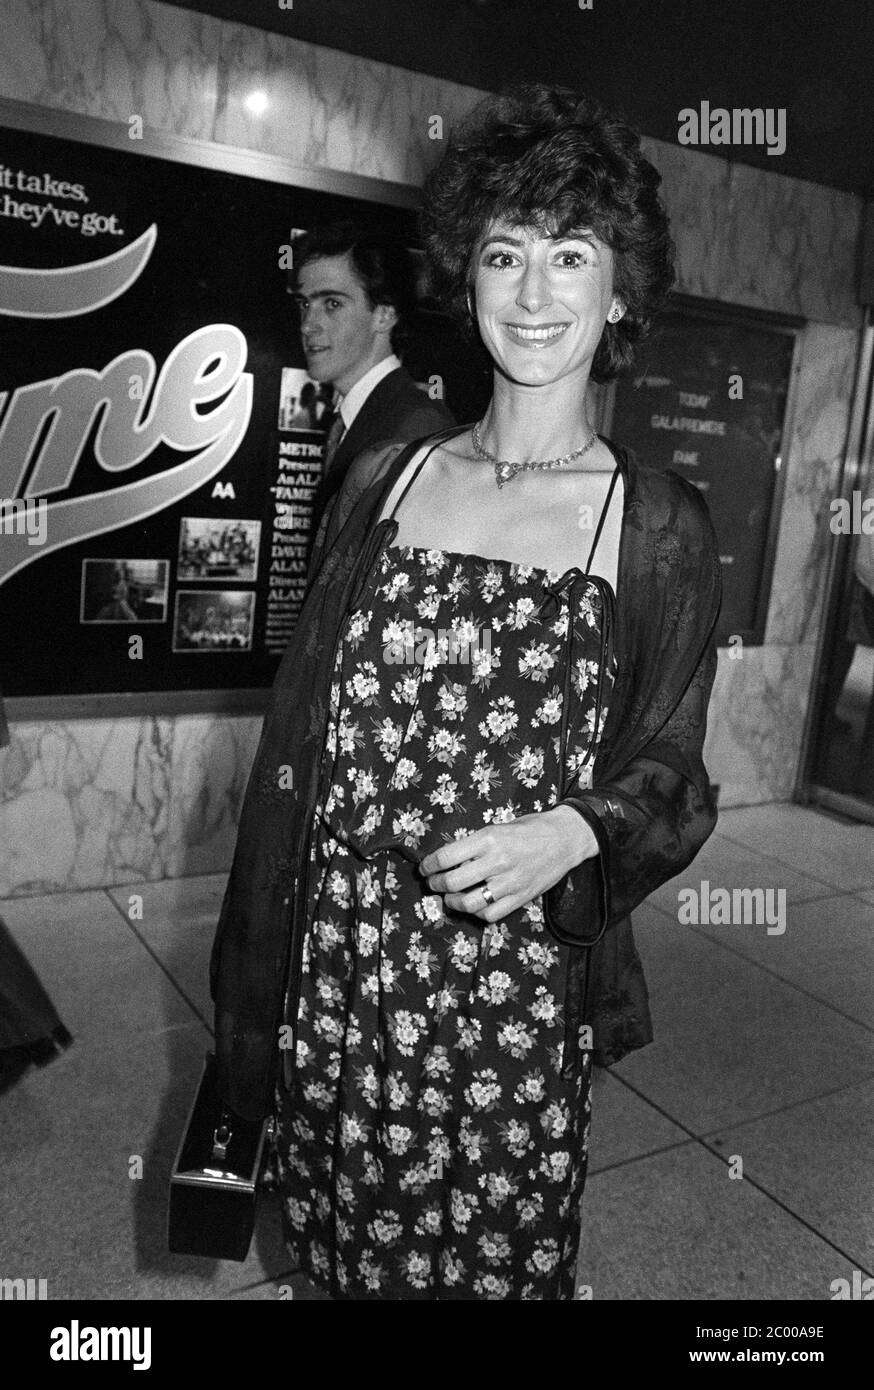 LONDON, UK. July 1980: Actress Maureen Lipman at the premiere of 